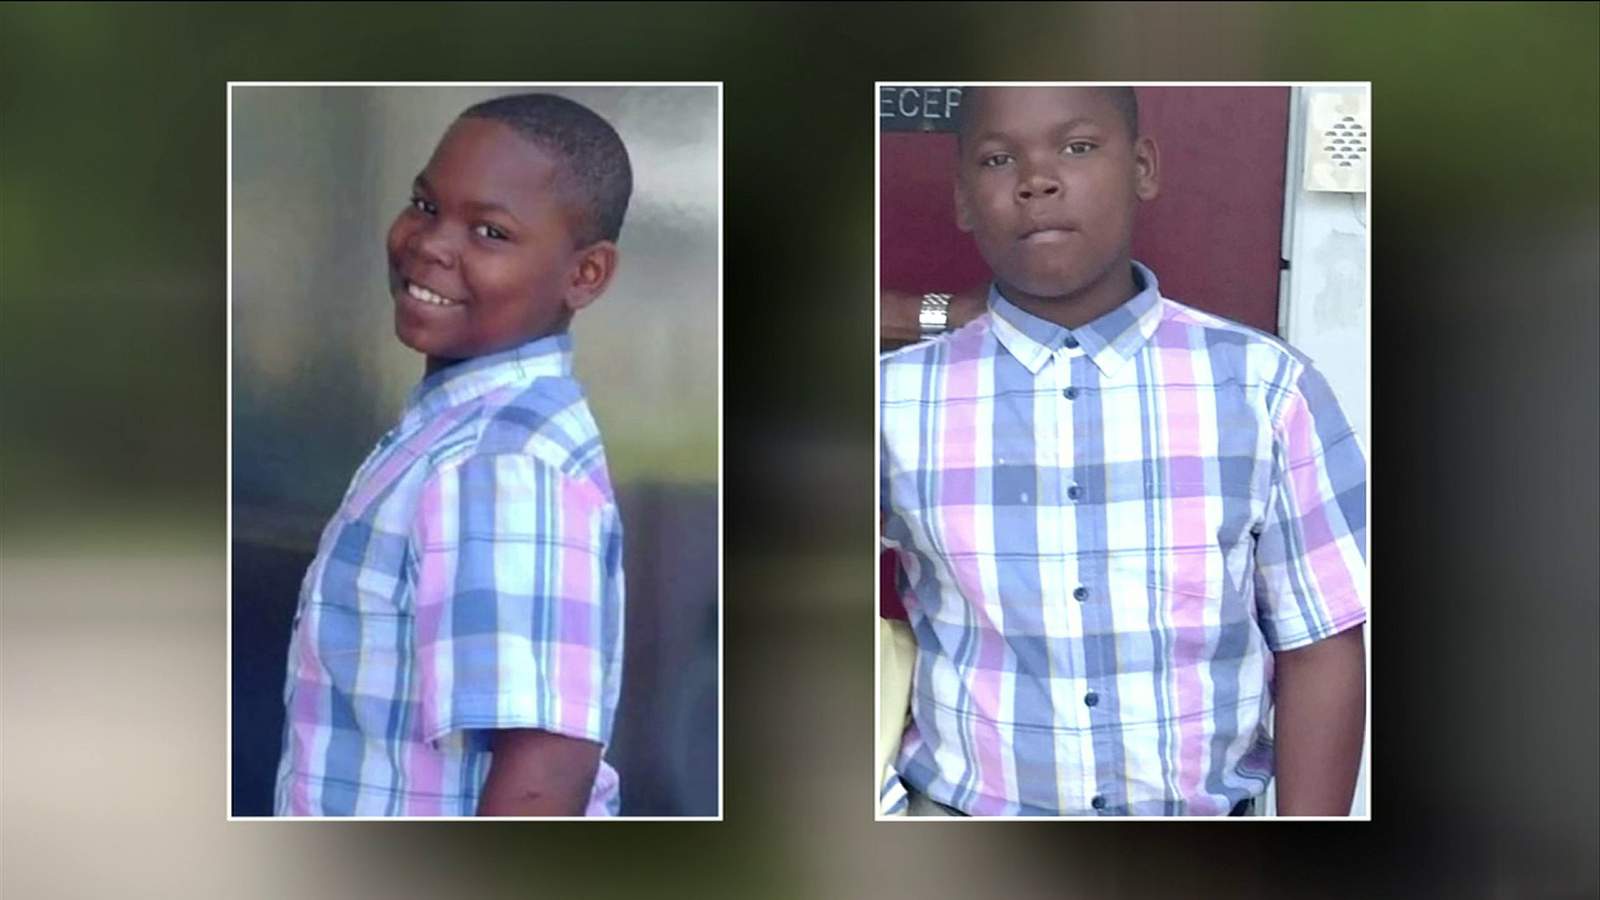 Missing Child Alert: Police search for Jacksonville boy